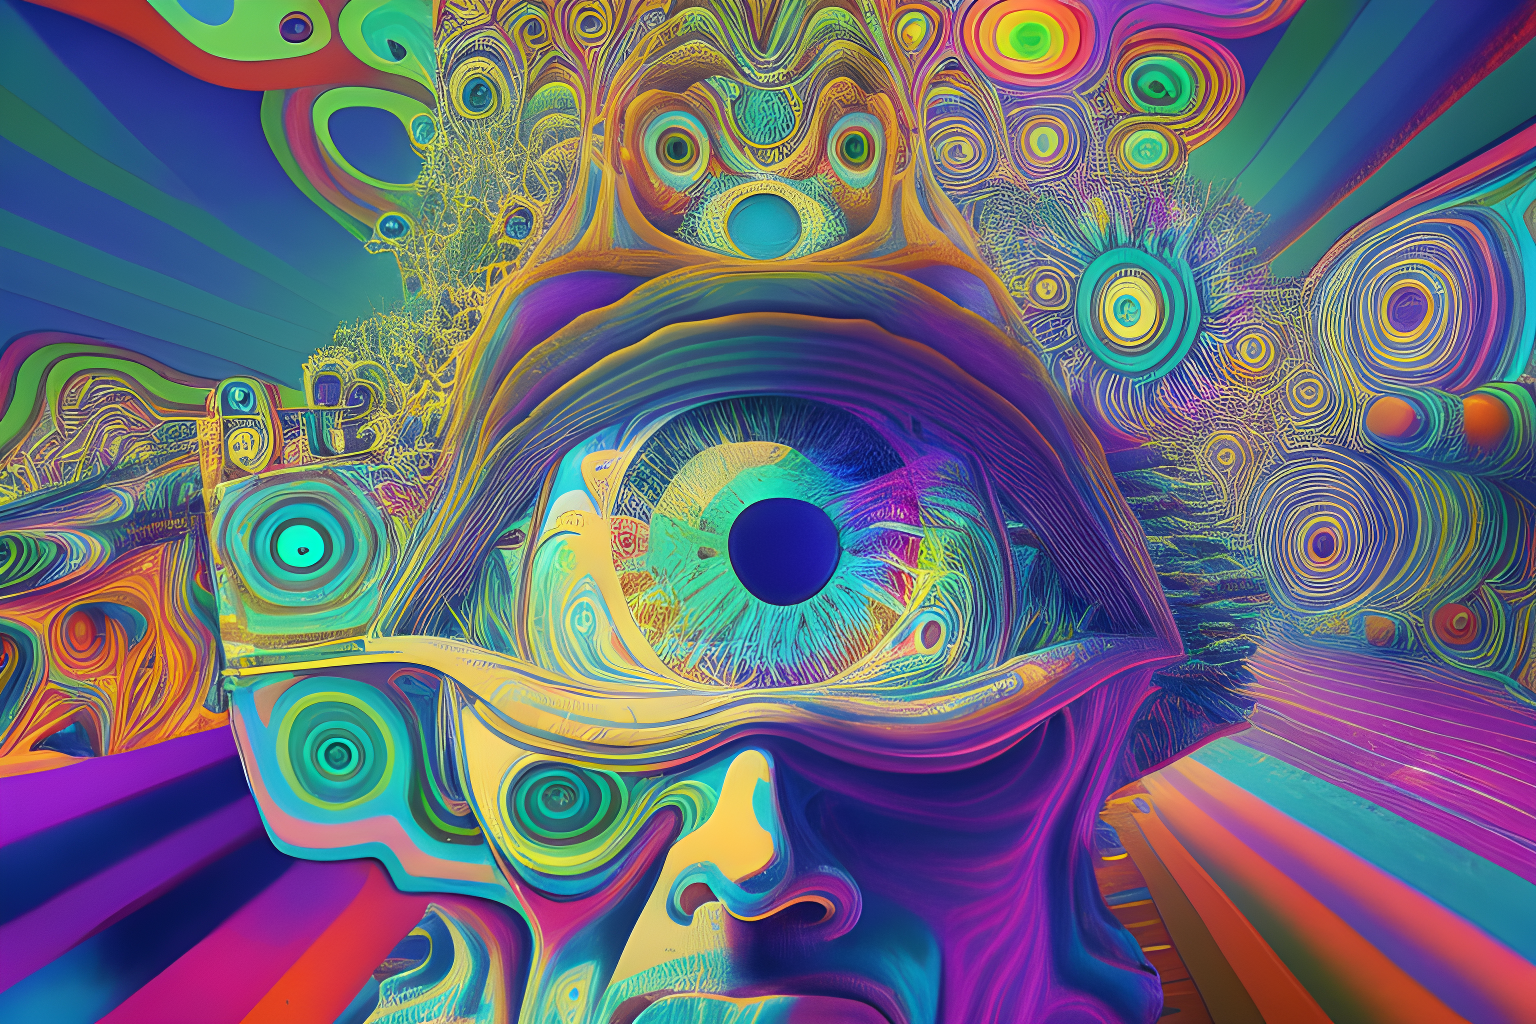 LSD technology that's trippy